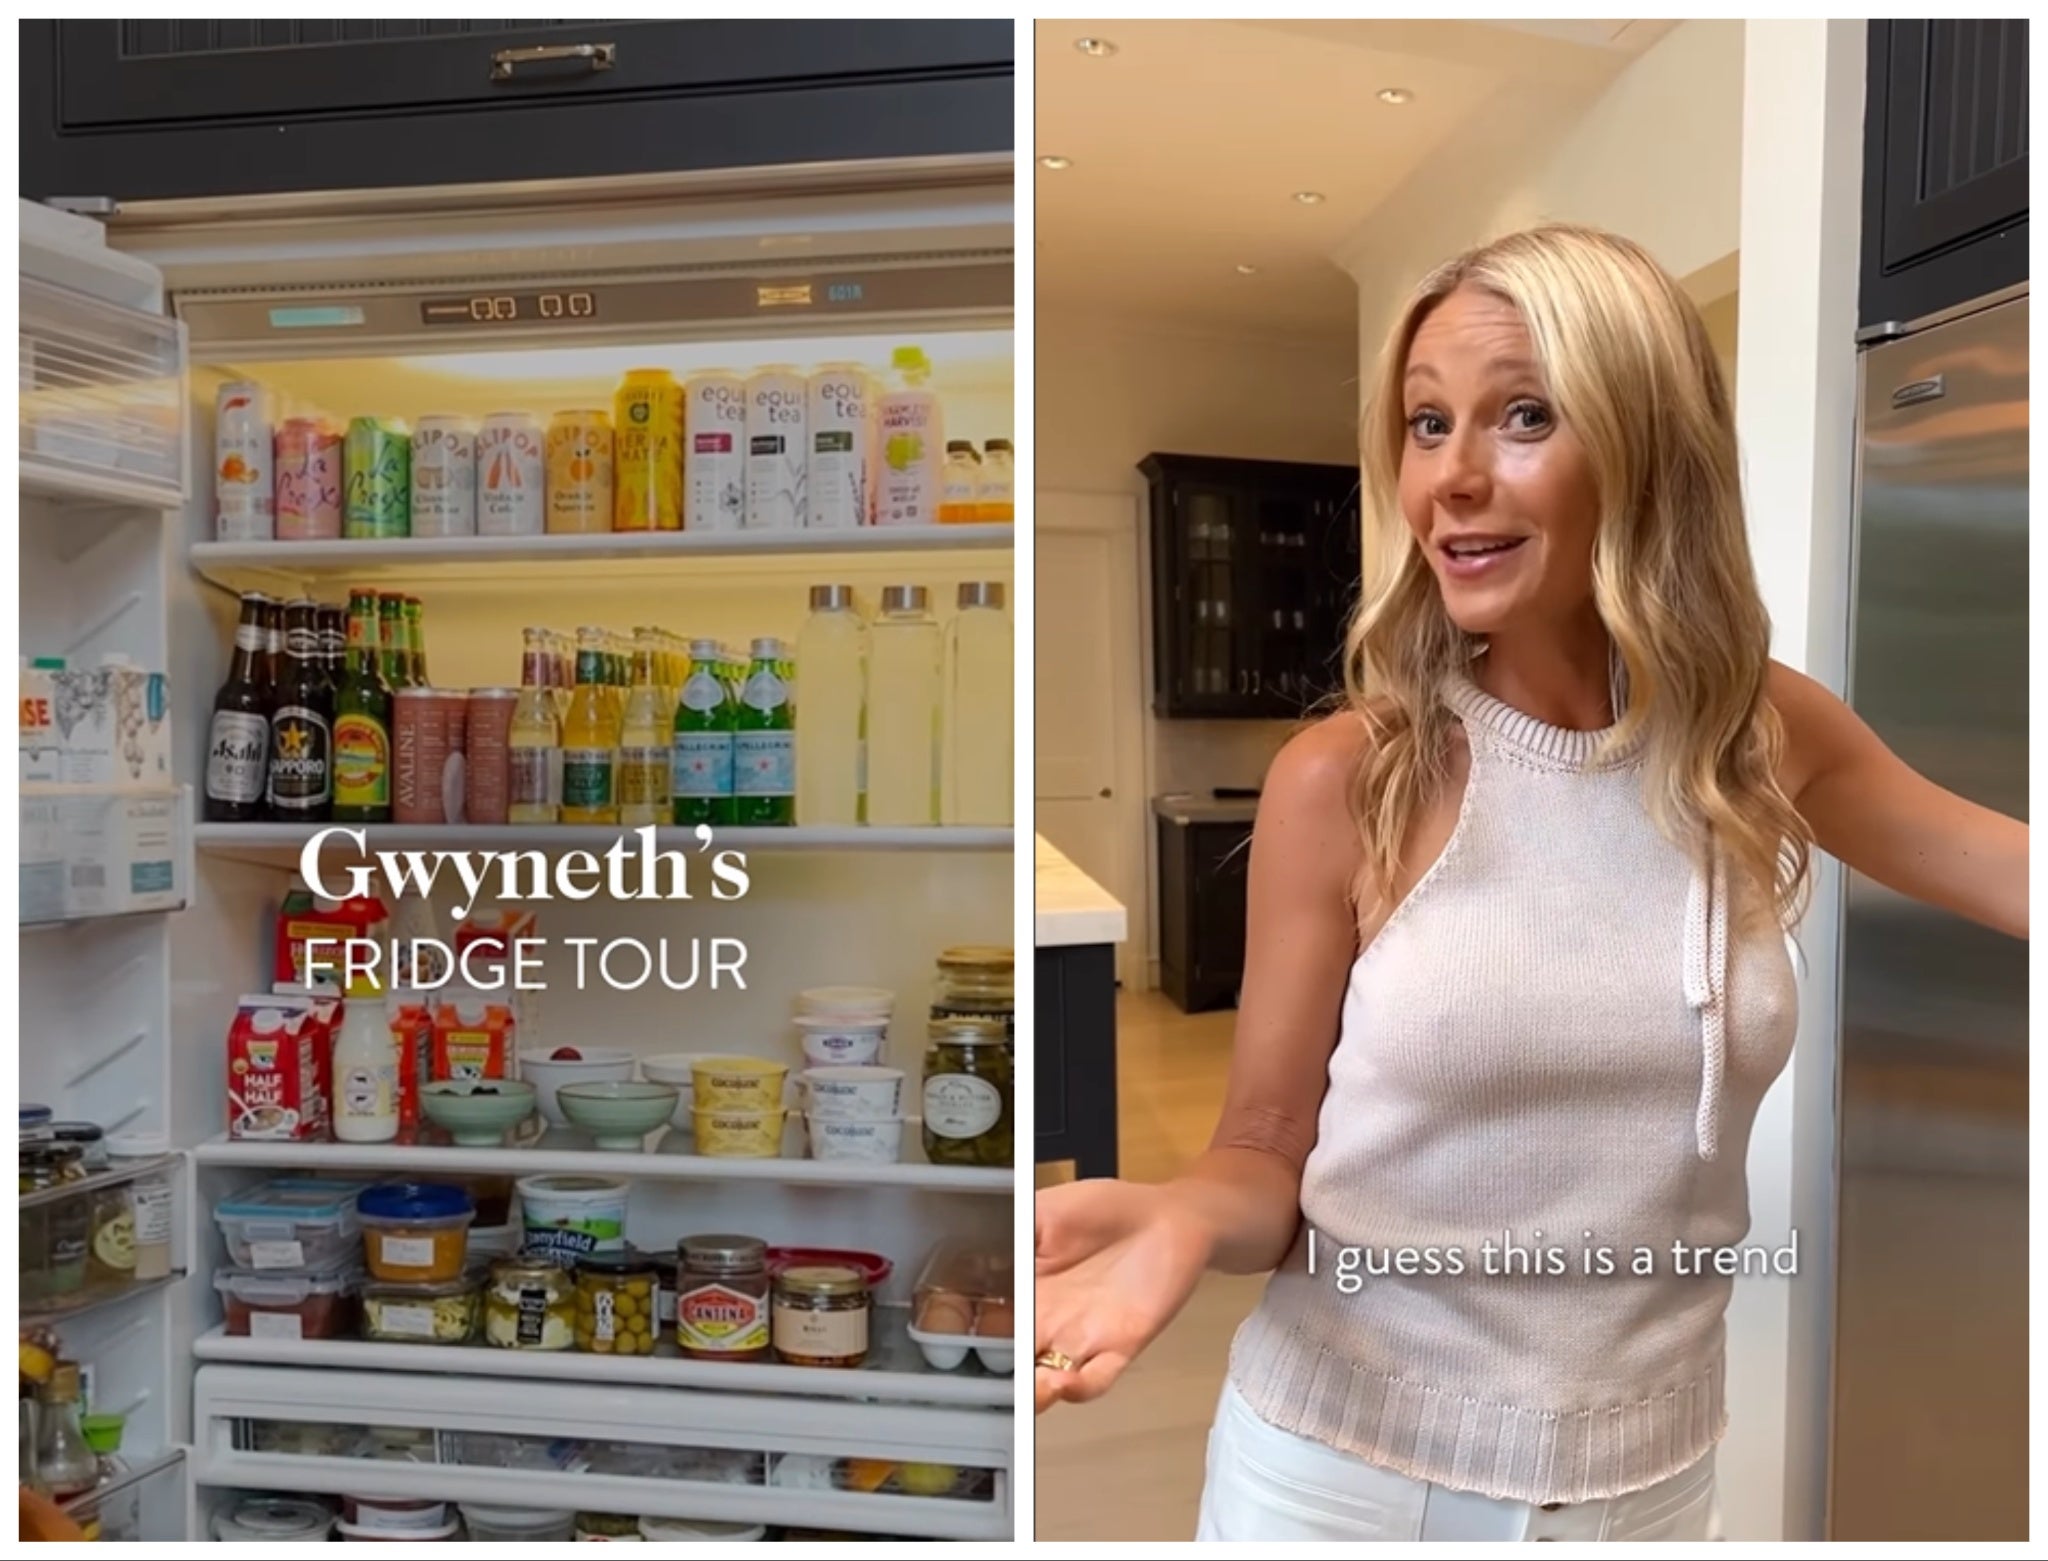 Gwyneth Paltrow during her fridge tour